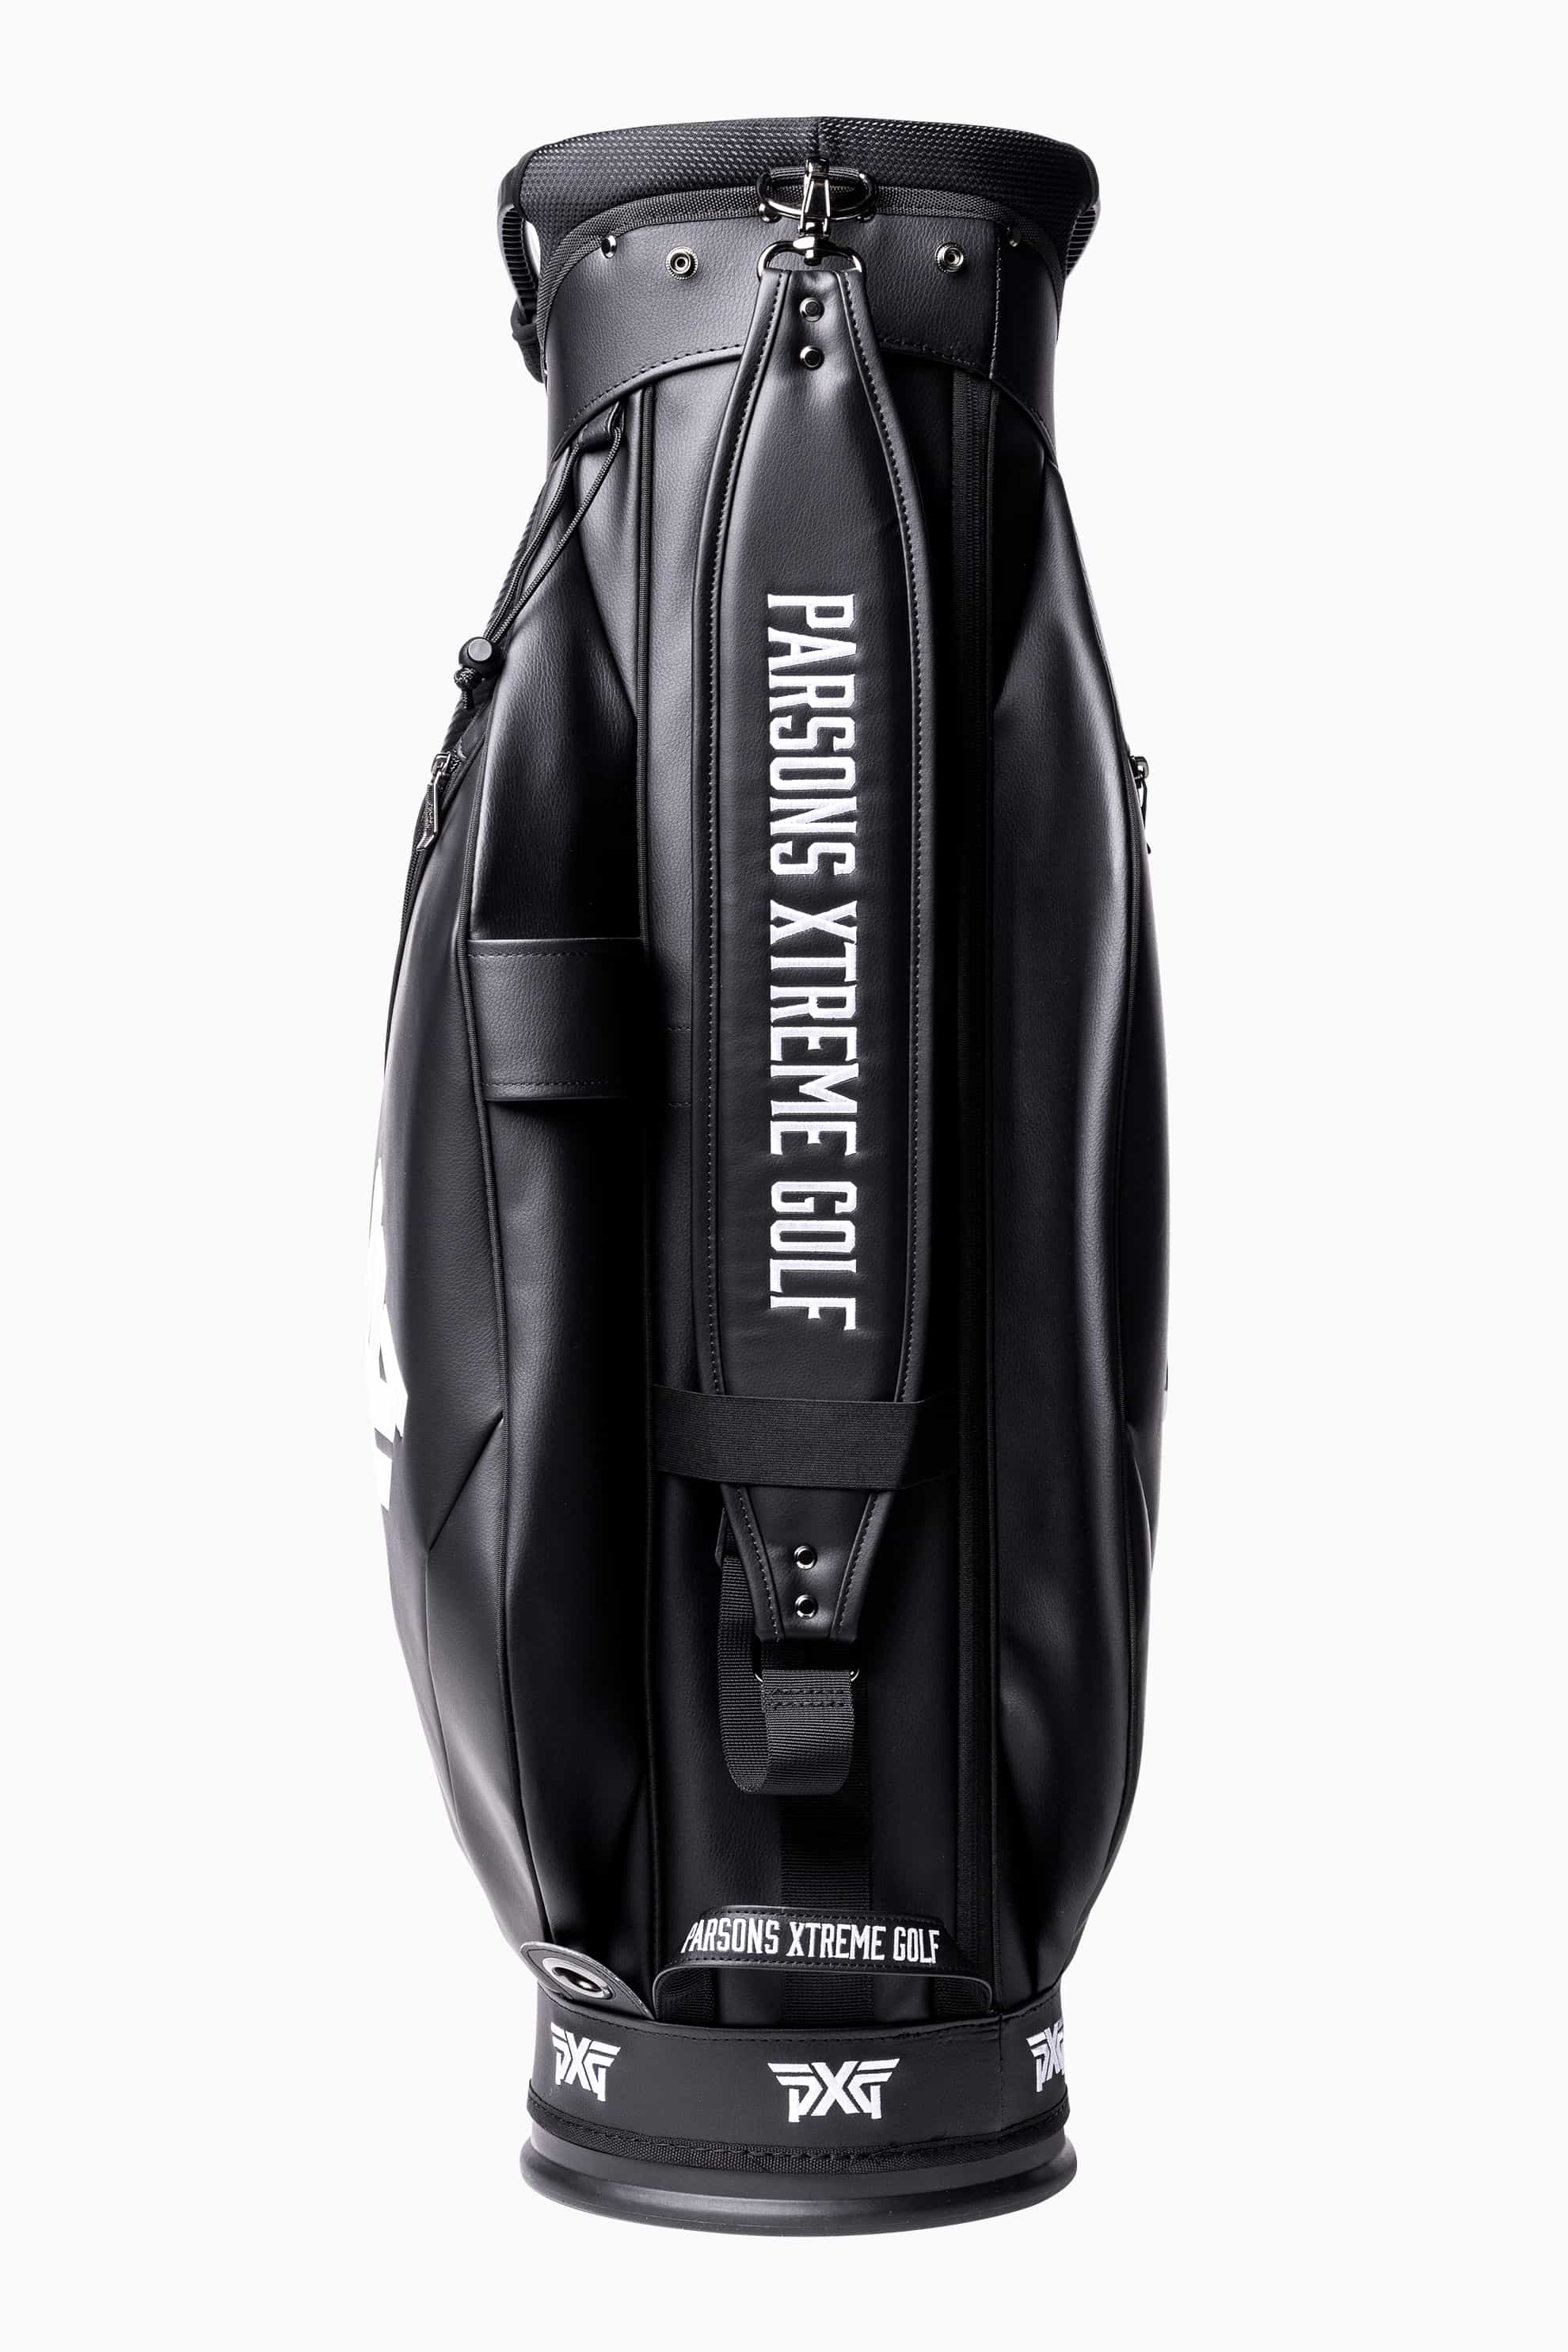 Deluxe Cart Bag | Golf Bags | Standing, Carry & Cart Bags - PXG